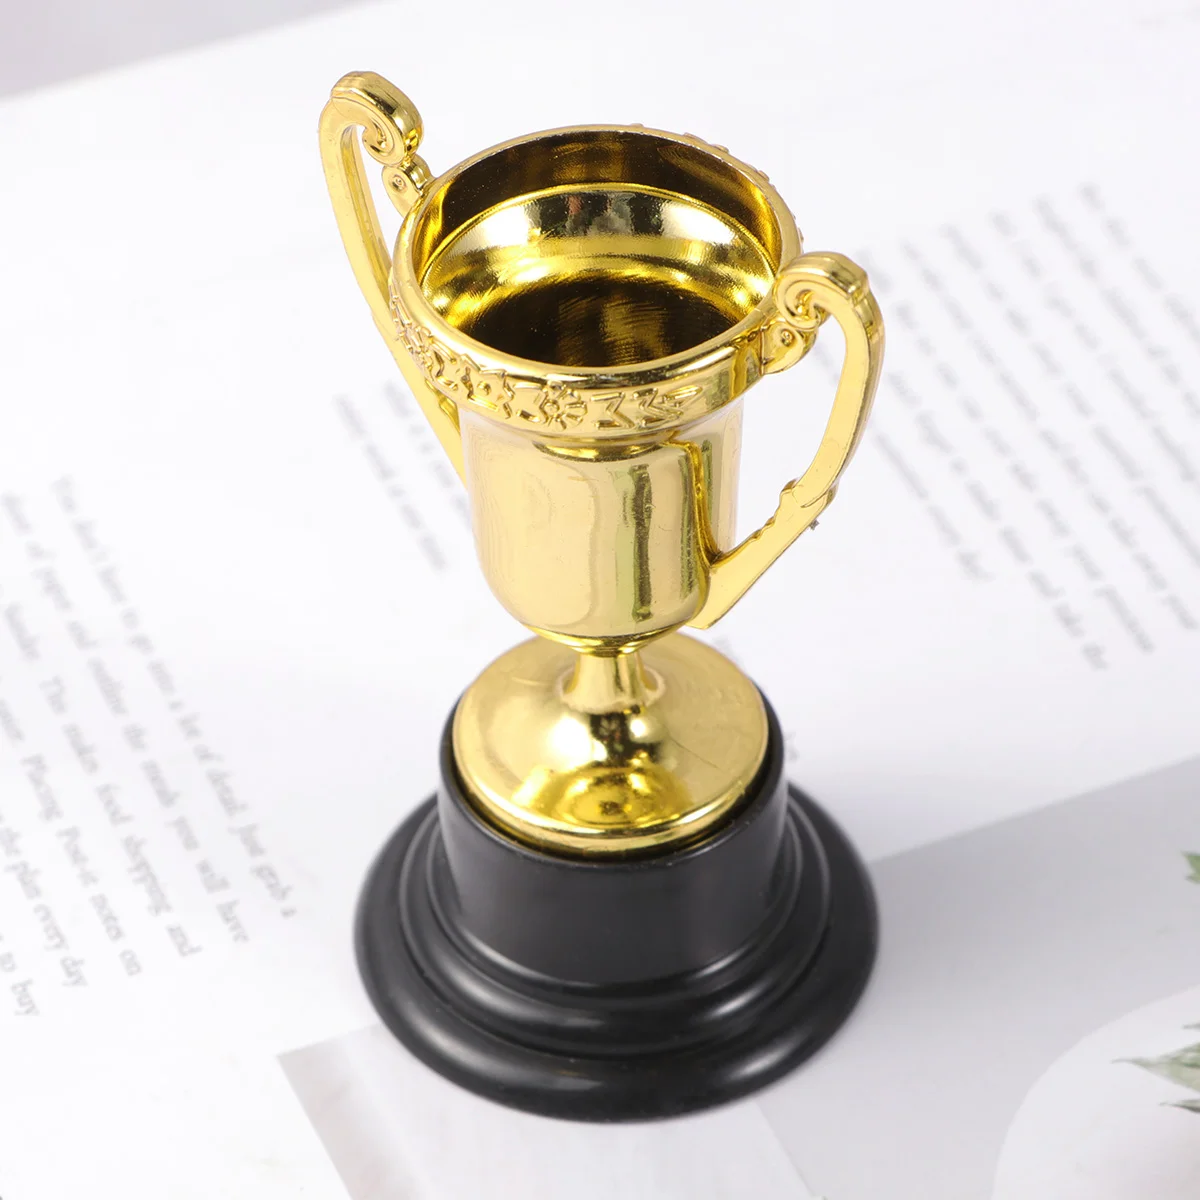 60 Pcs Kids Reward Trophy Plastic Prize Cup Children Reward Prizes Small Cup with Base Golden Sports medals set